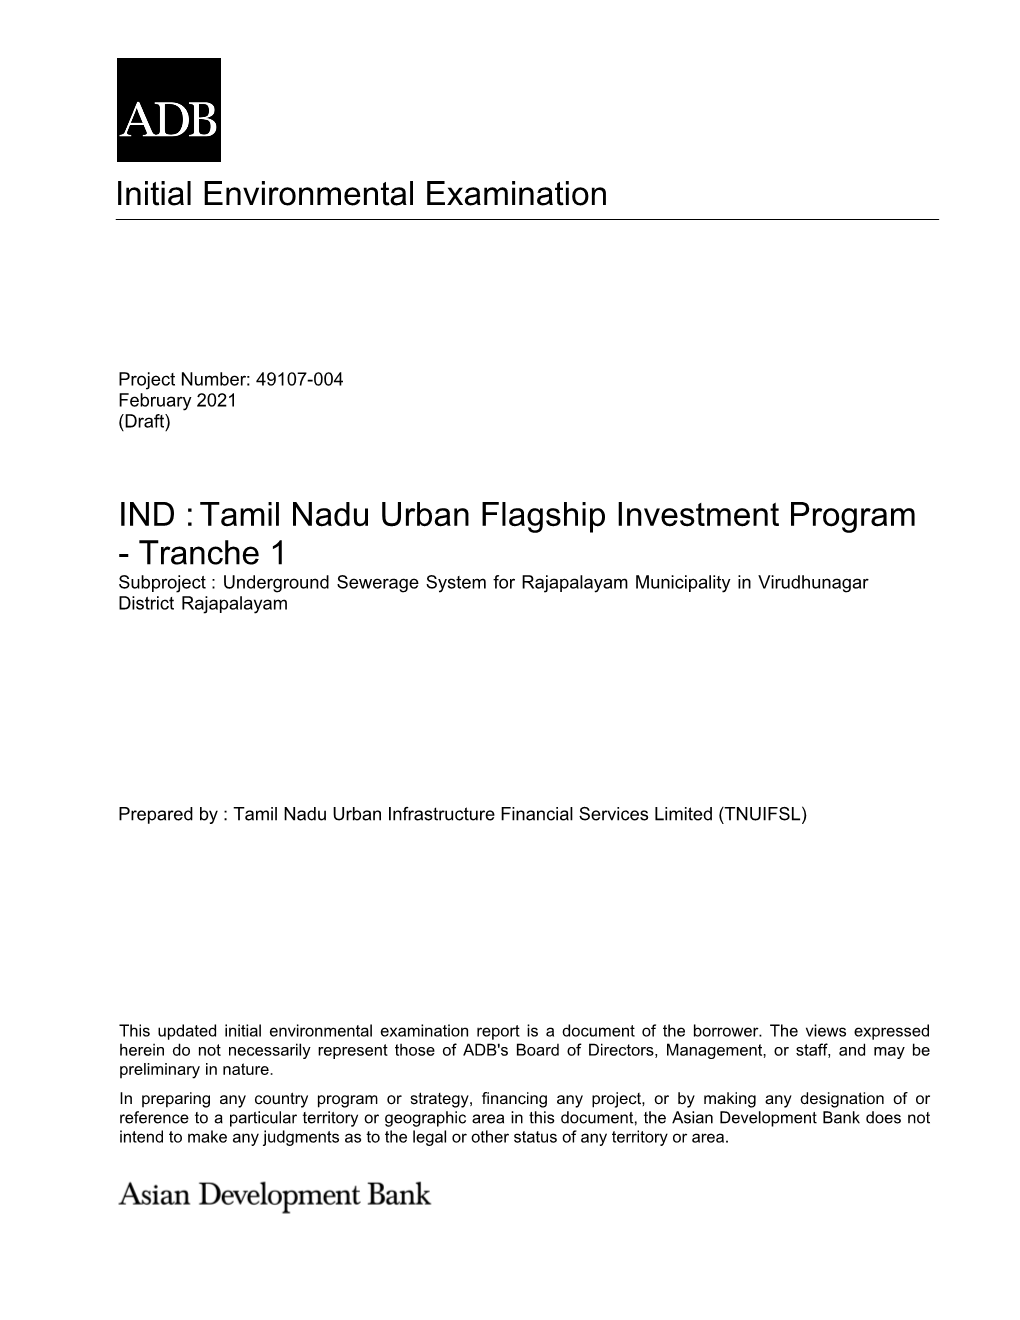 Tamil Nadu Urban Flagship Investment Program - Tranche 1 Subproject : Underground Sewerage System for Rajapalayam Municipality in Virudhunagar District Rajapalayam